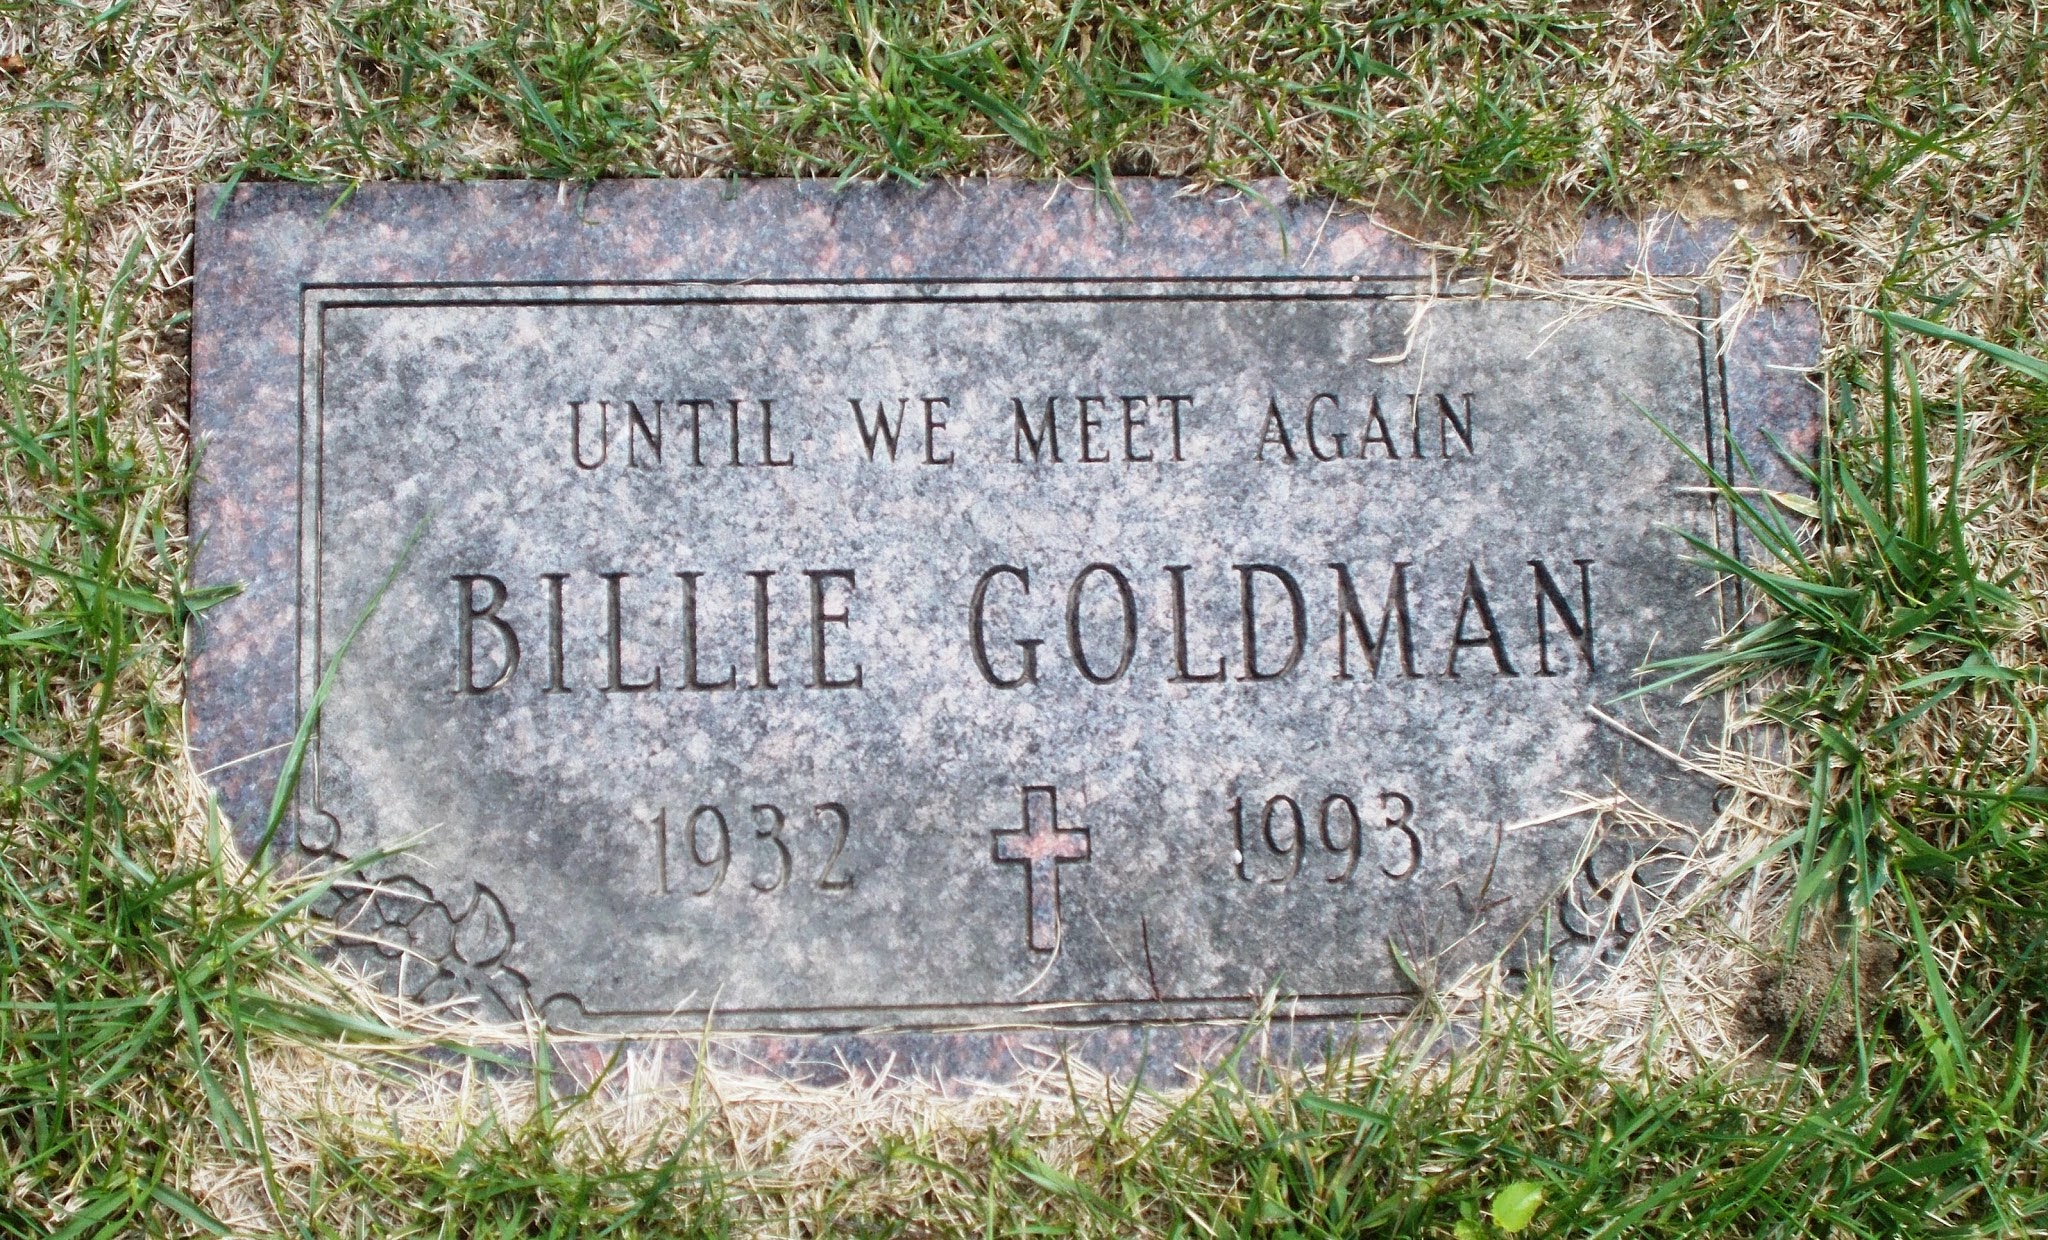 Billie Goldman